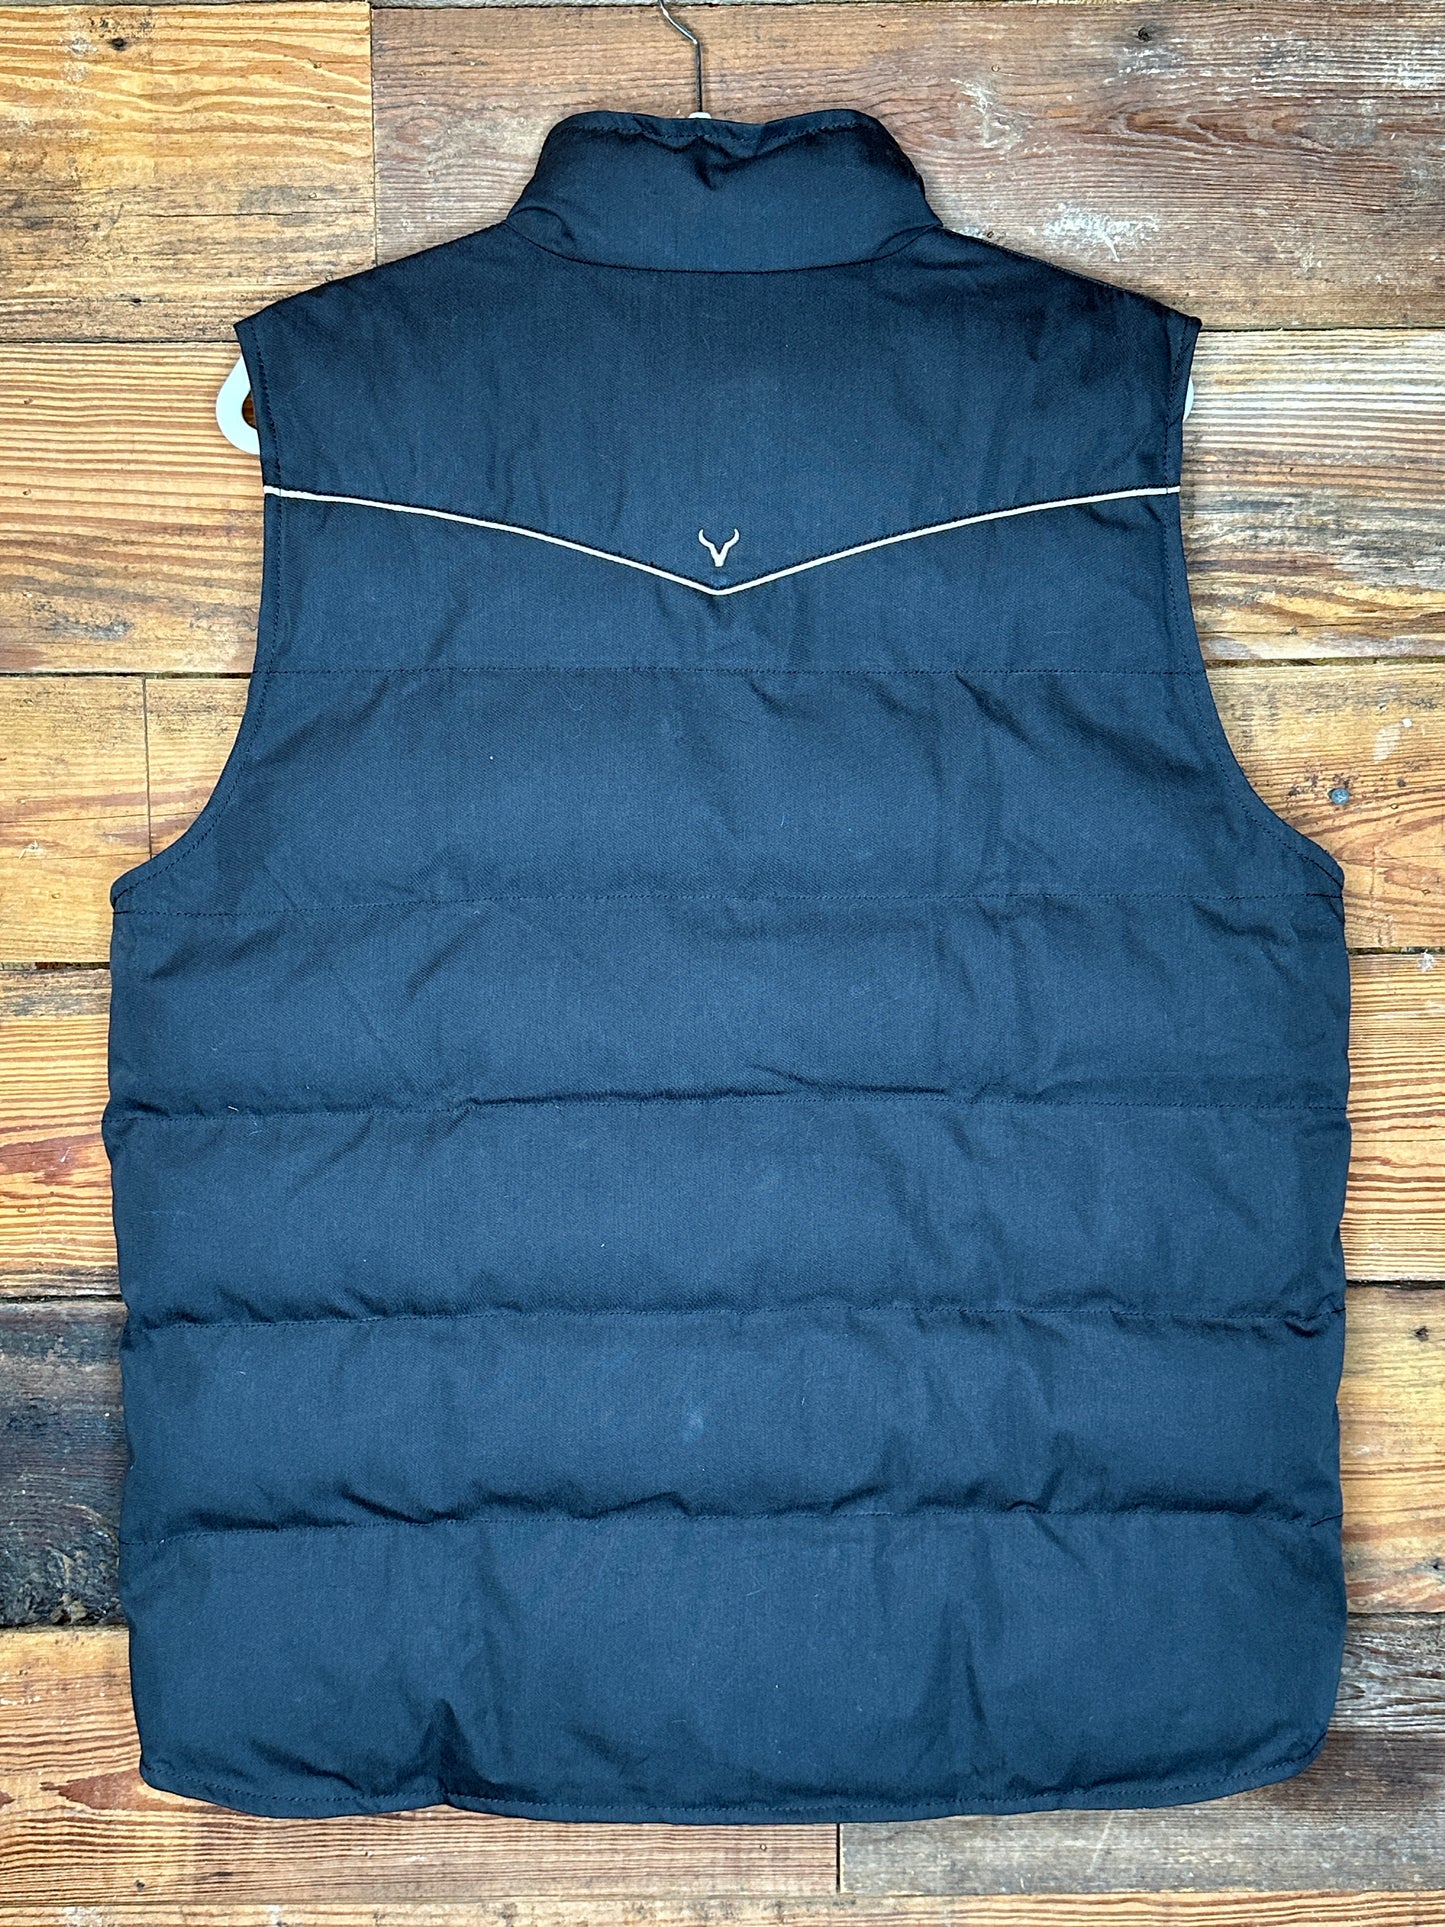 Vexil Brand - Men's Insulated Vest - Black/Tan Piping